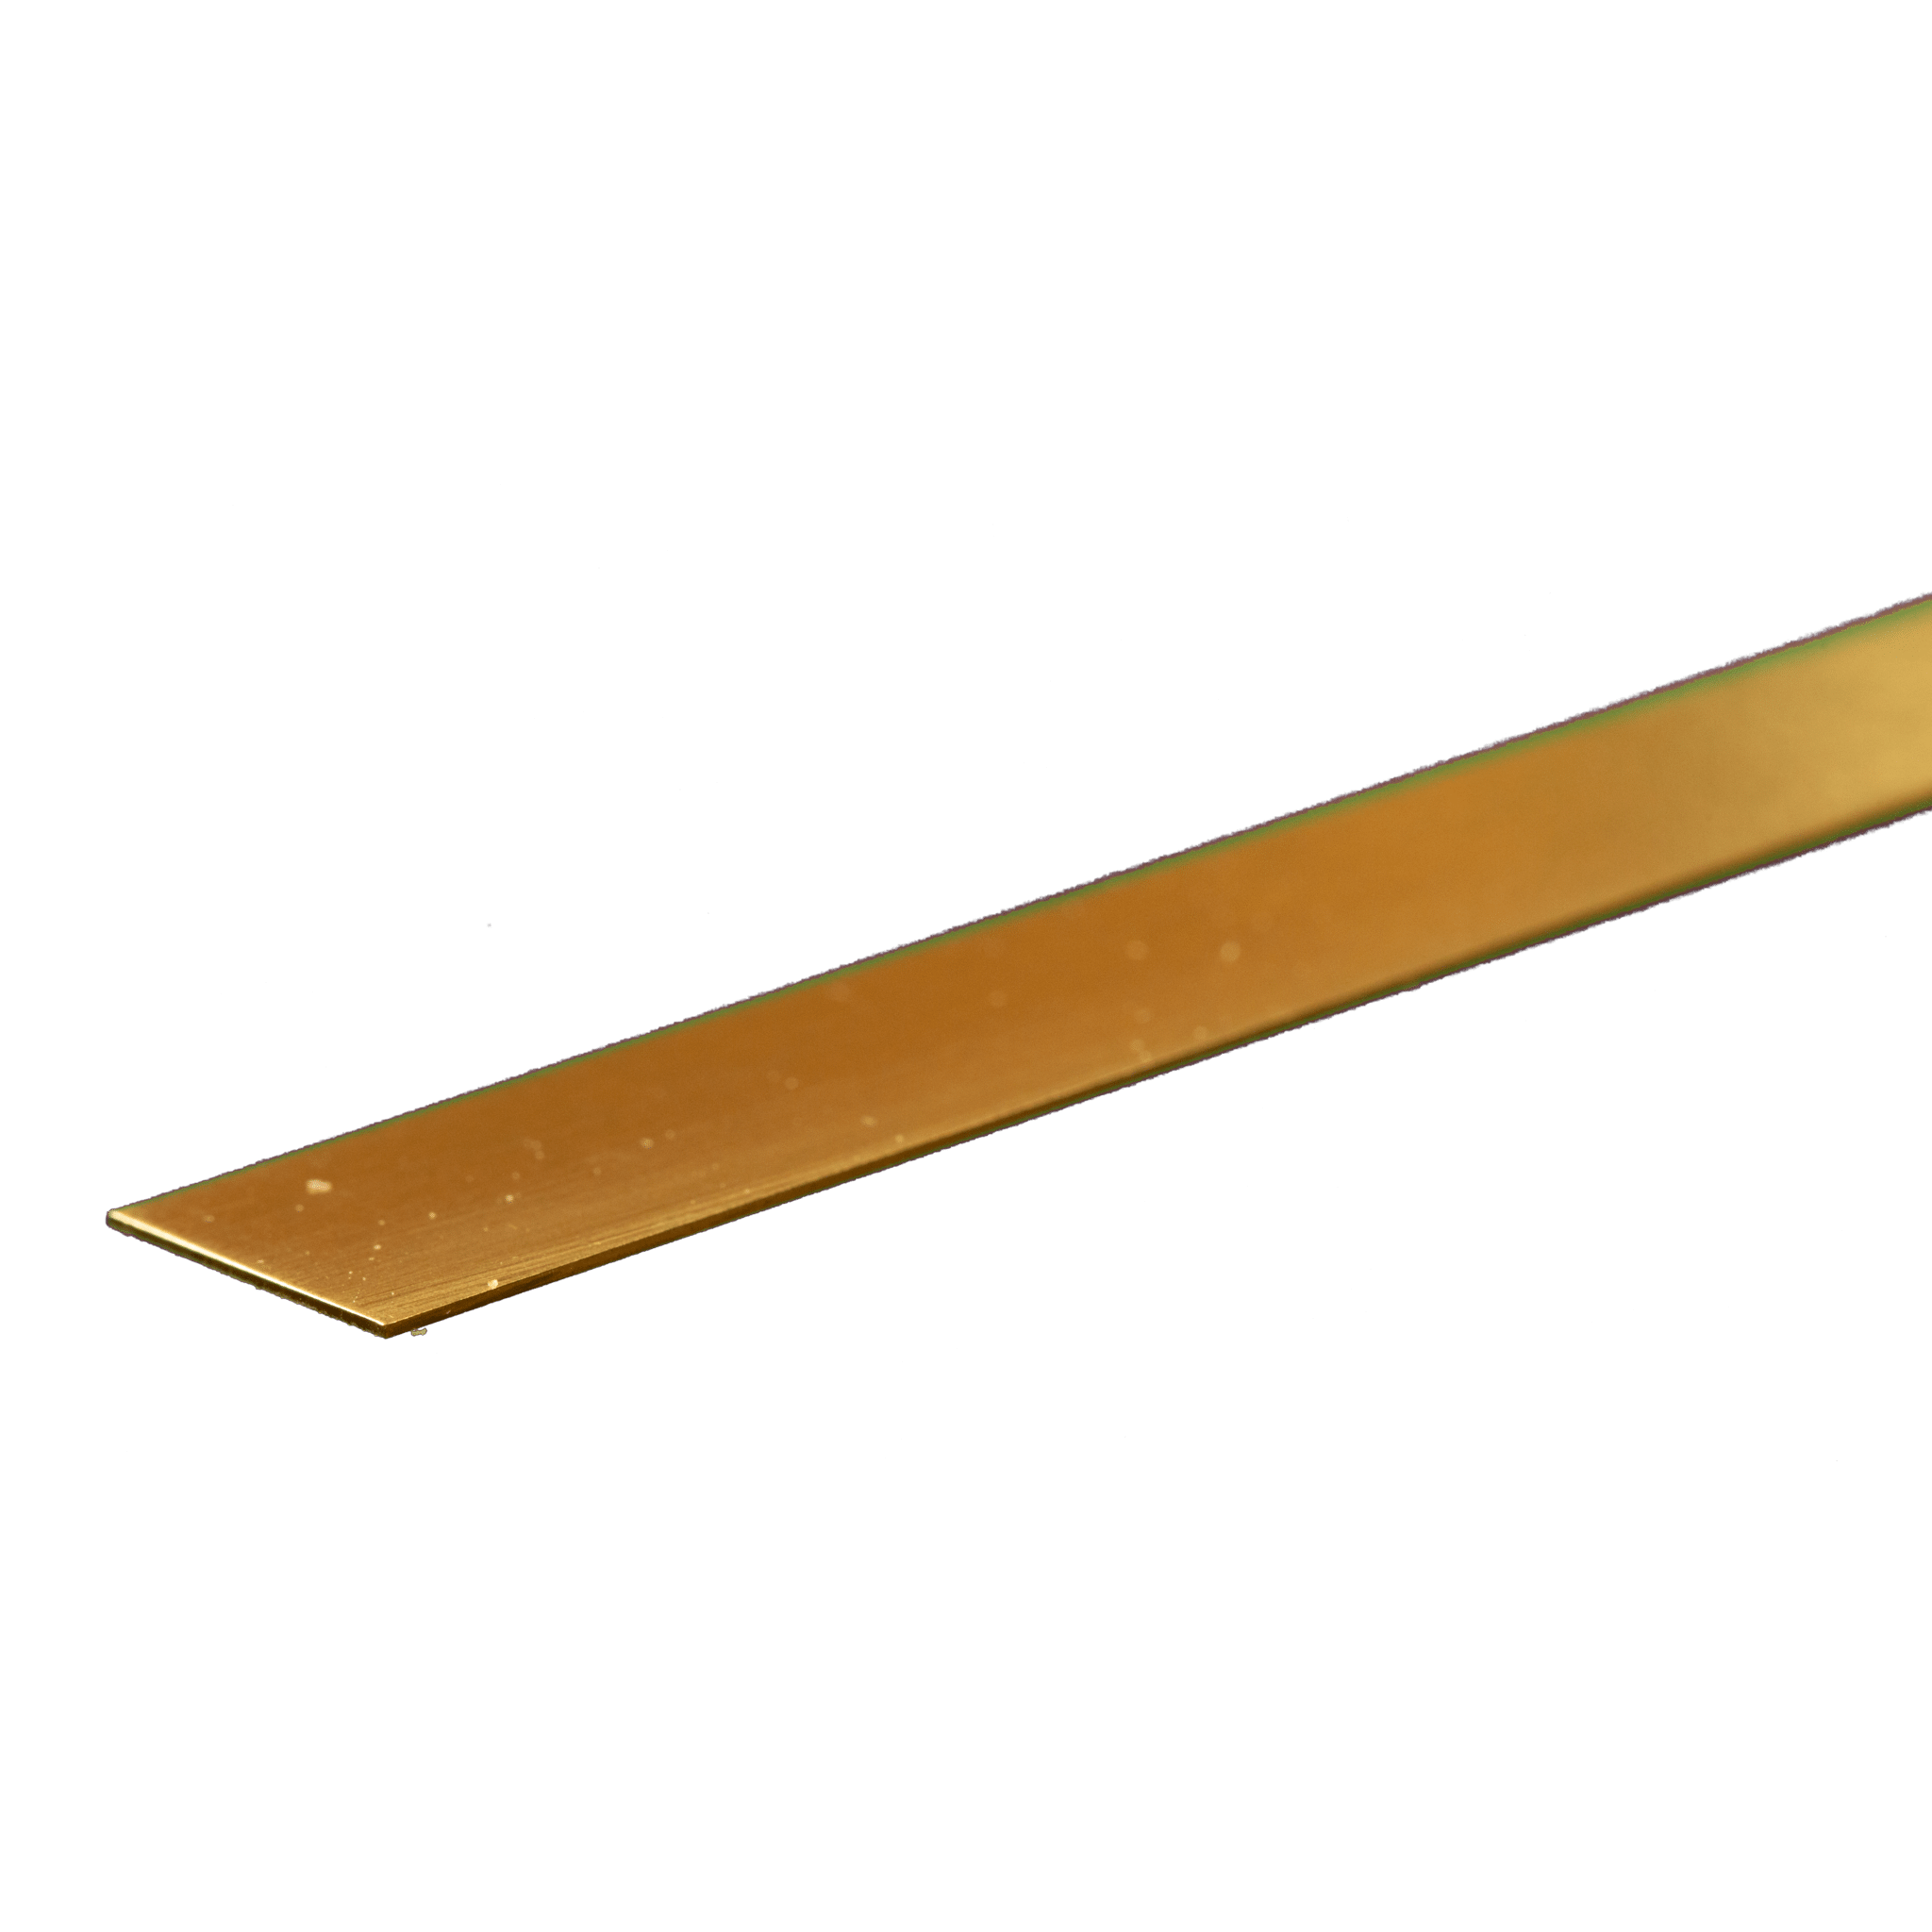 K&S Metals 8231 Brass Strip 0.016" Thick X 1/2" Wide x 12" Long (1 Piece)